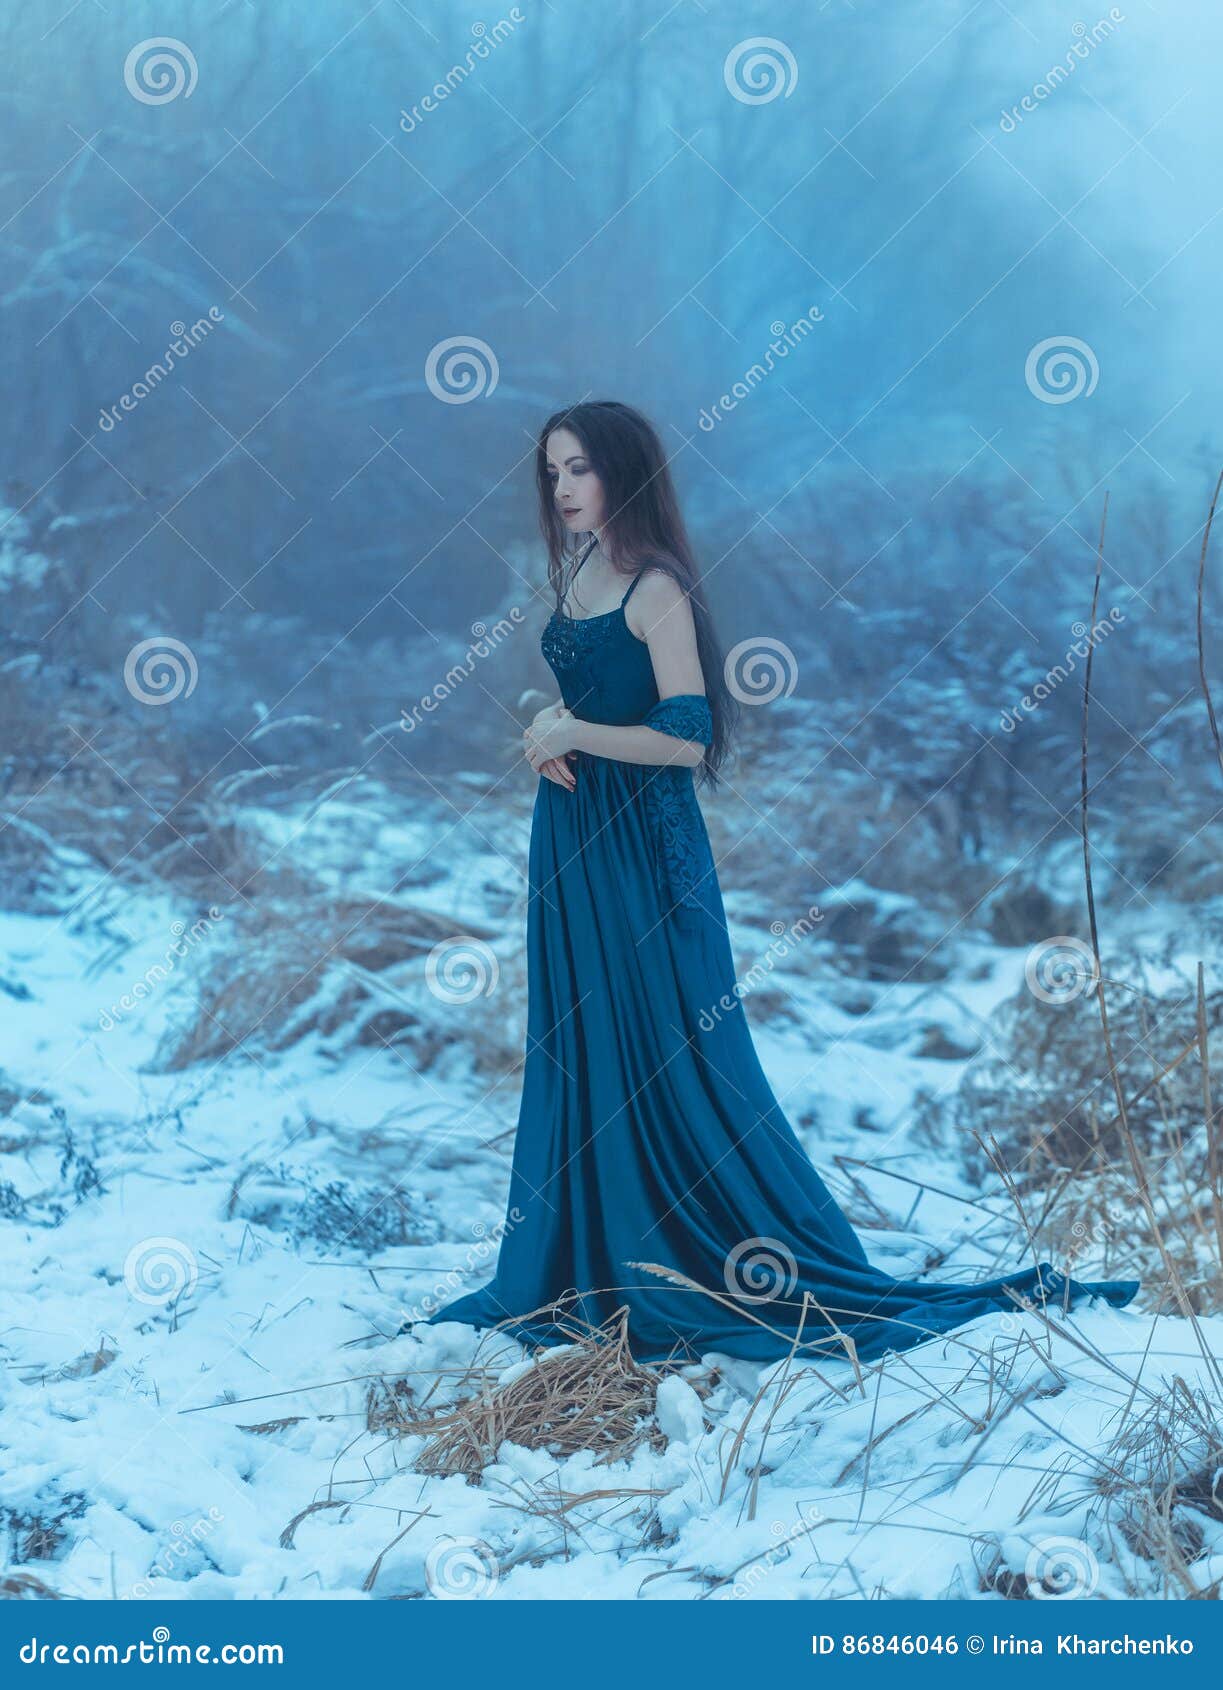 lady in a luxury lush blue dress